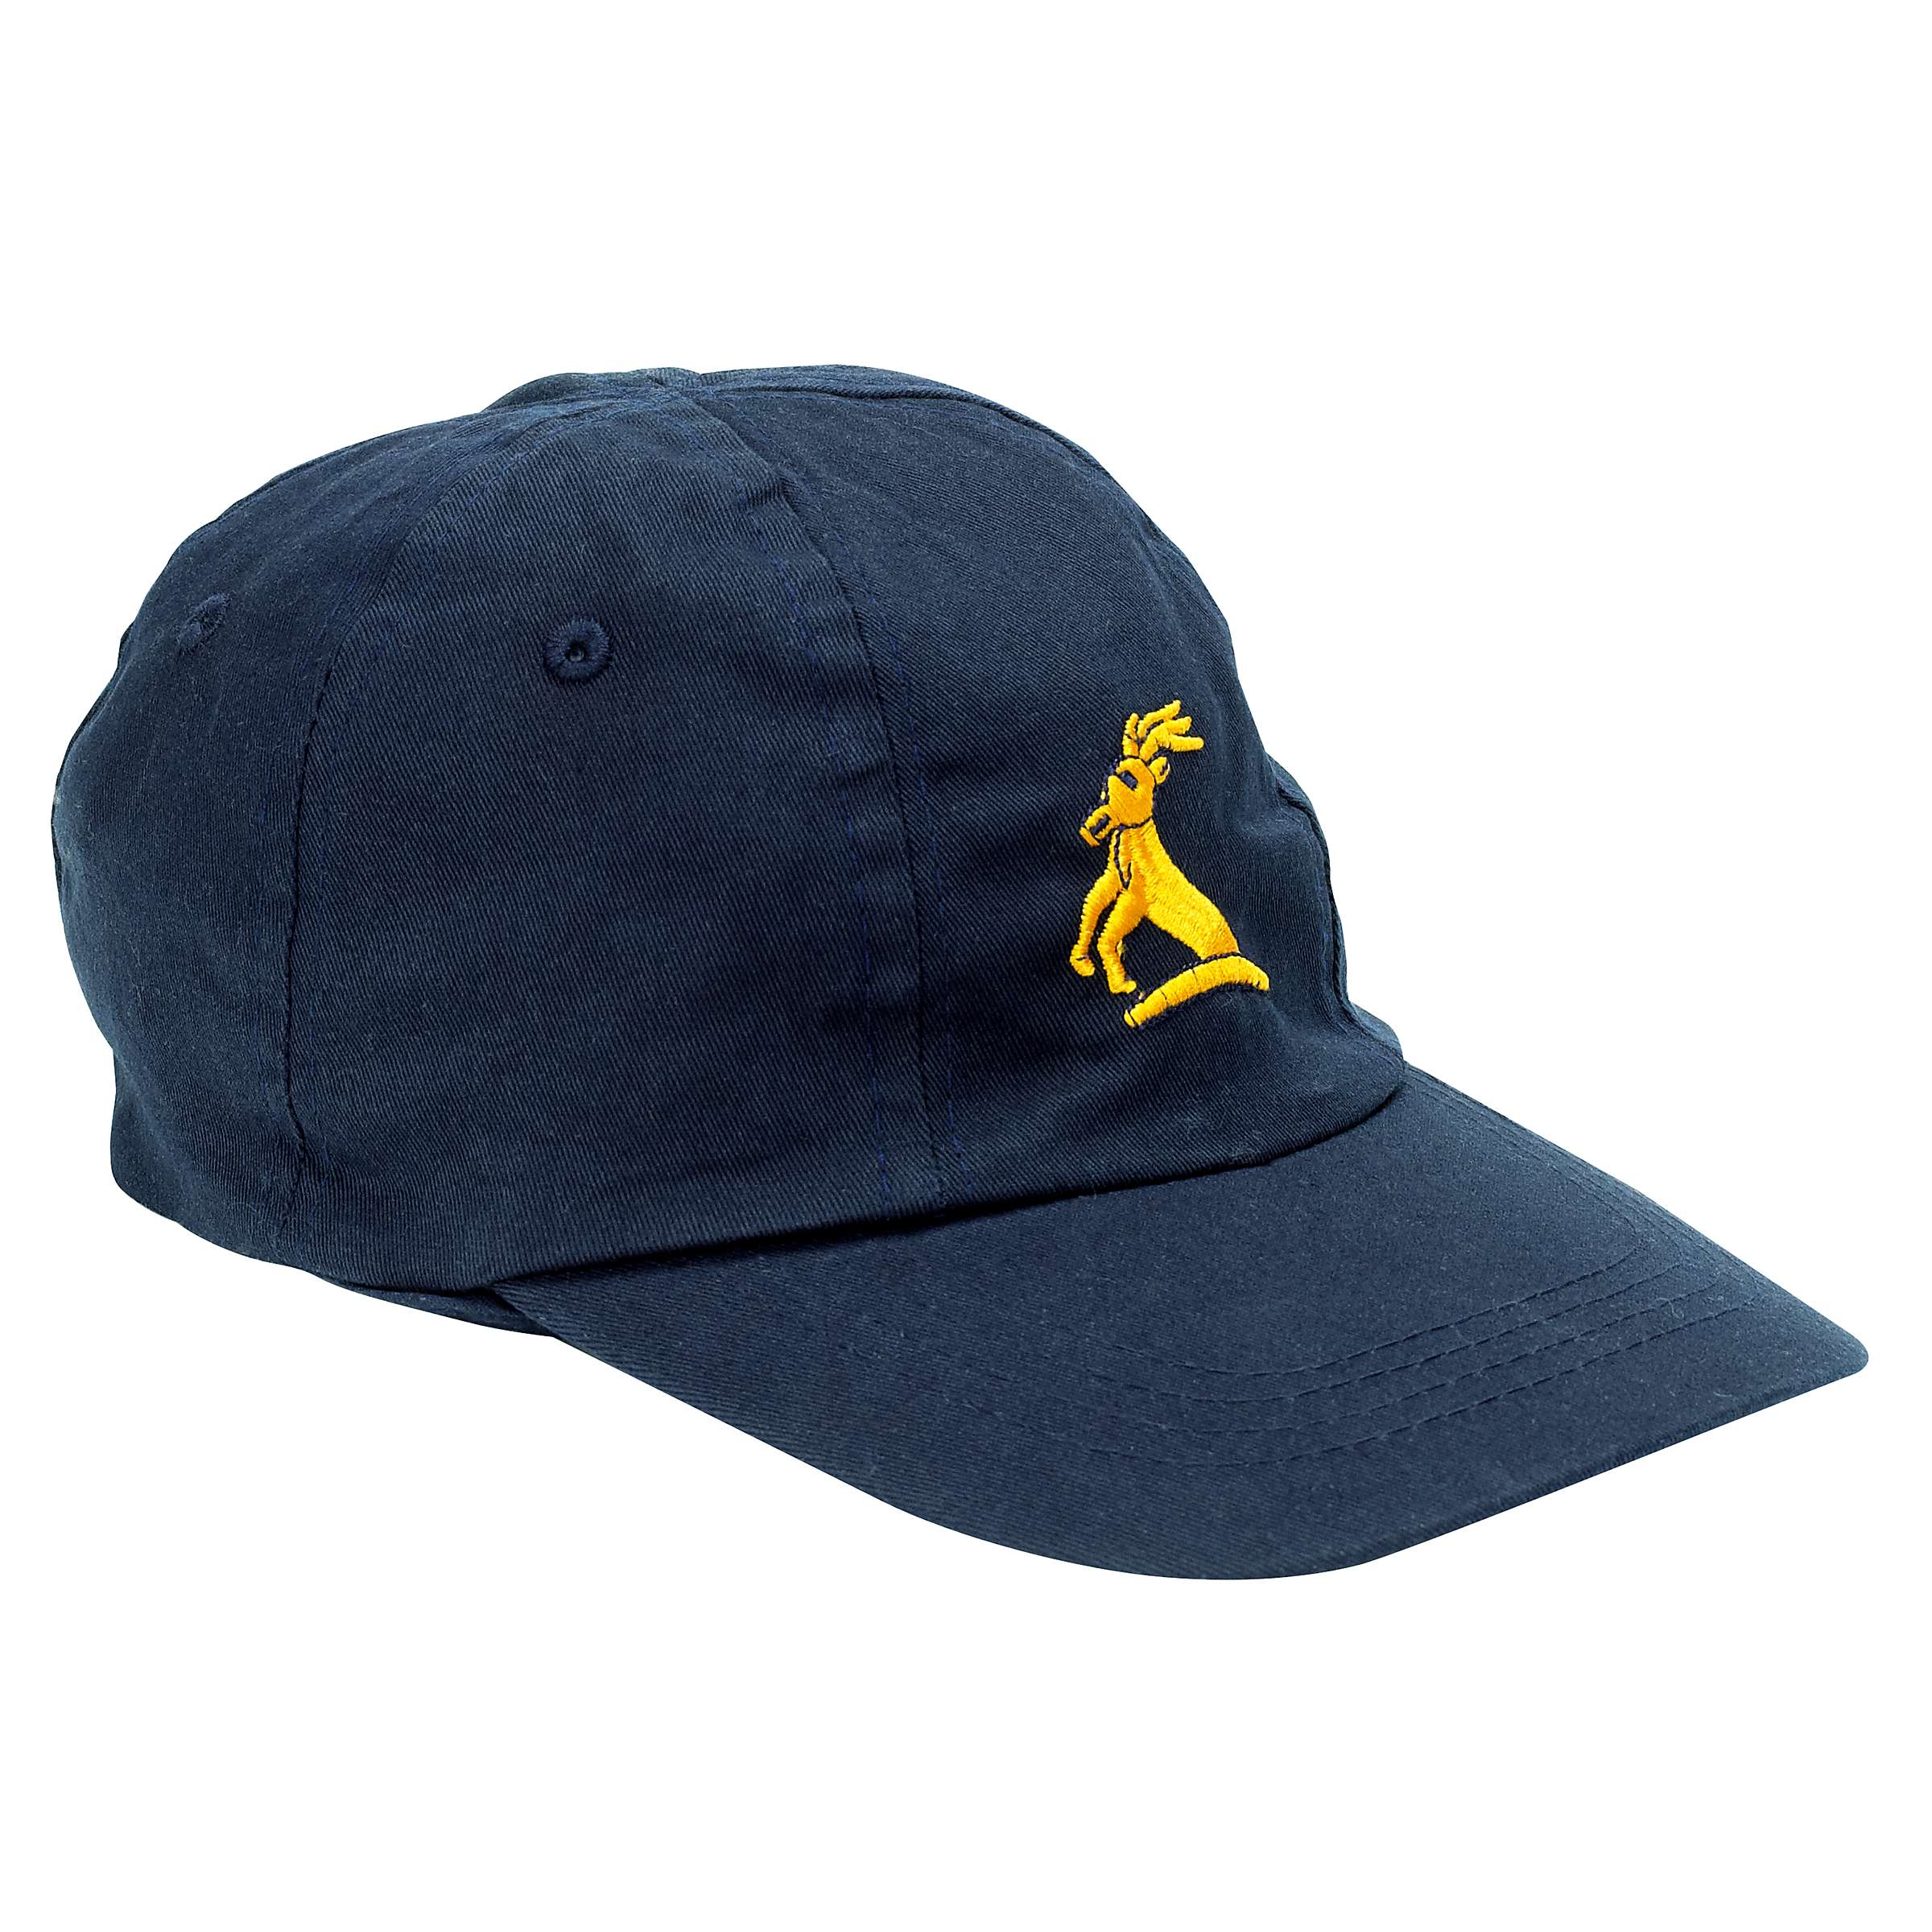 Buy Colfe's School Unisex Cricket Baseball Cap, Navy Blue Online at johnlewis.com